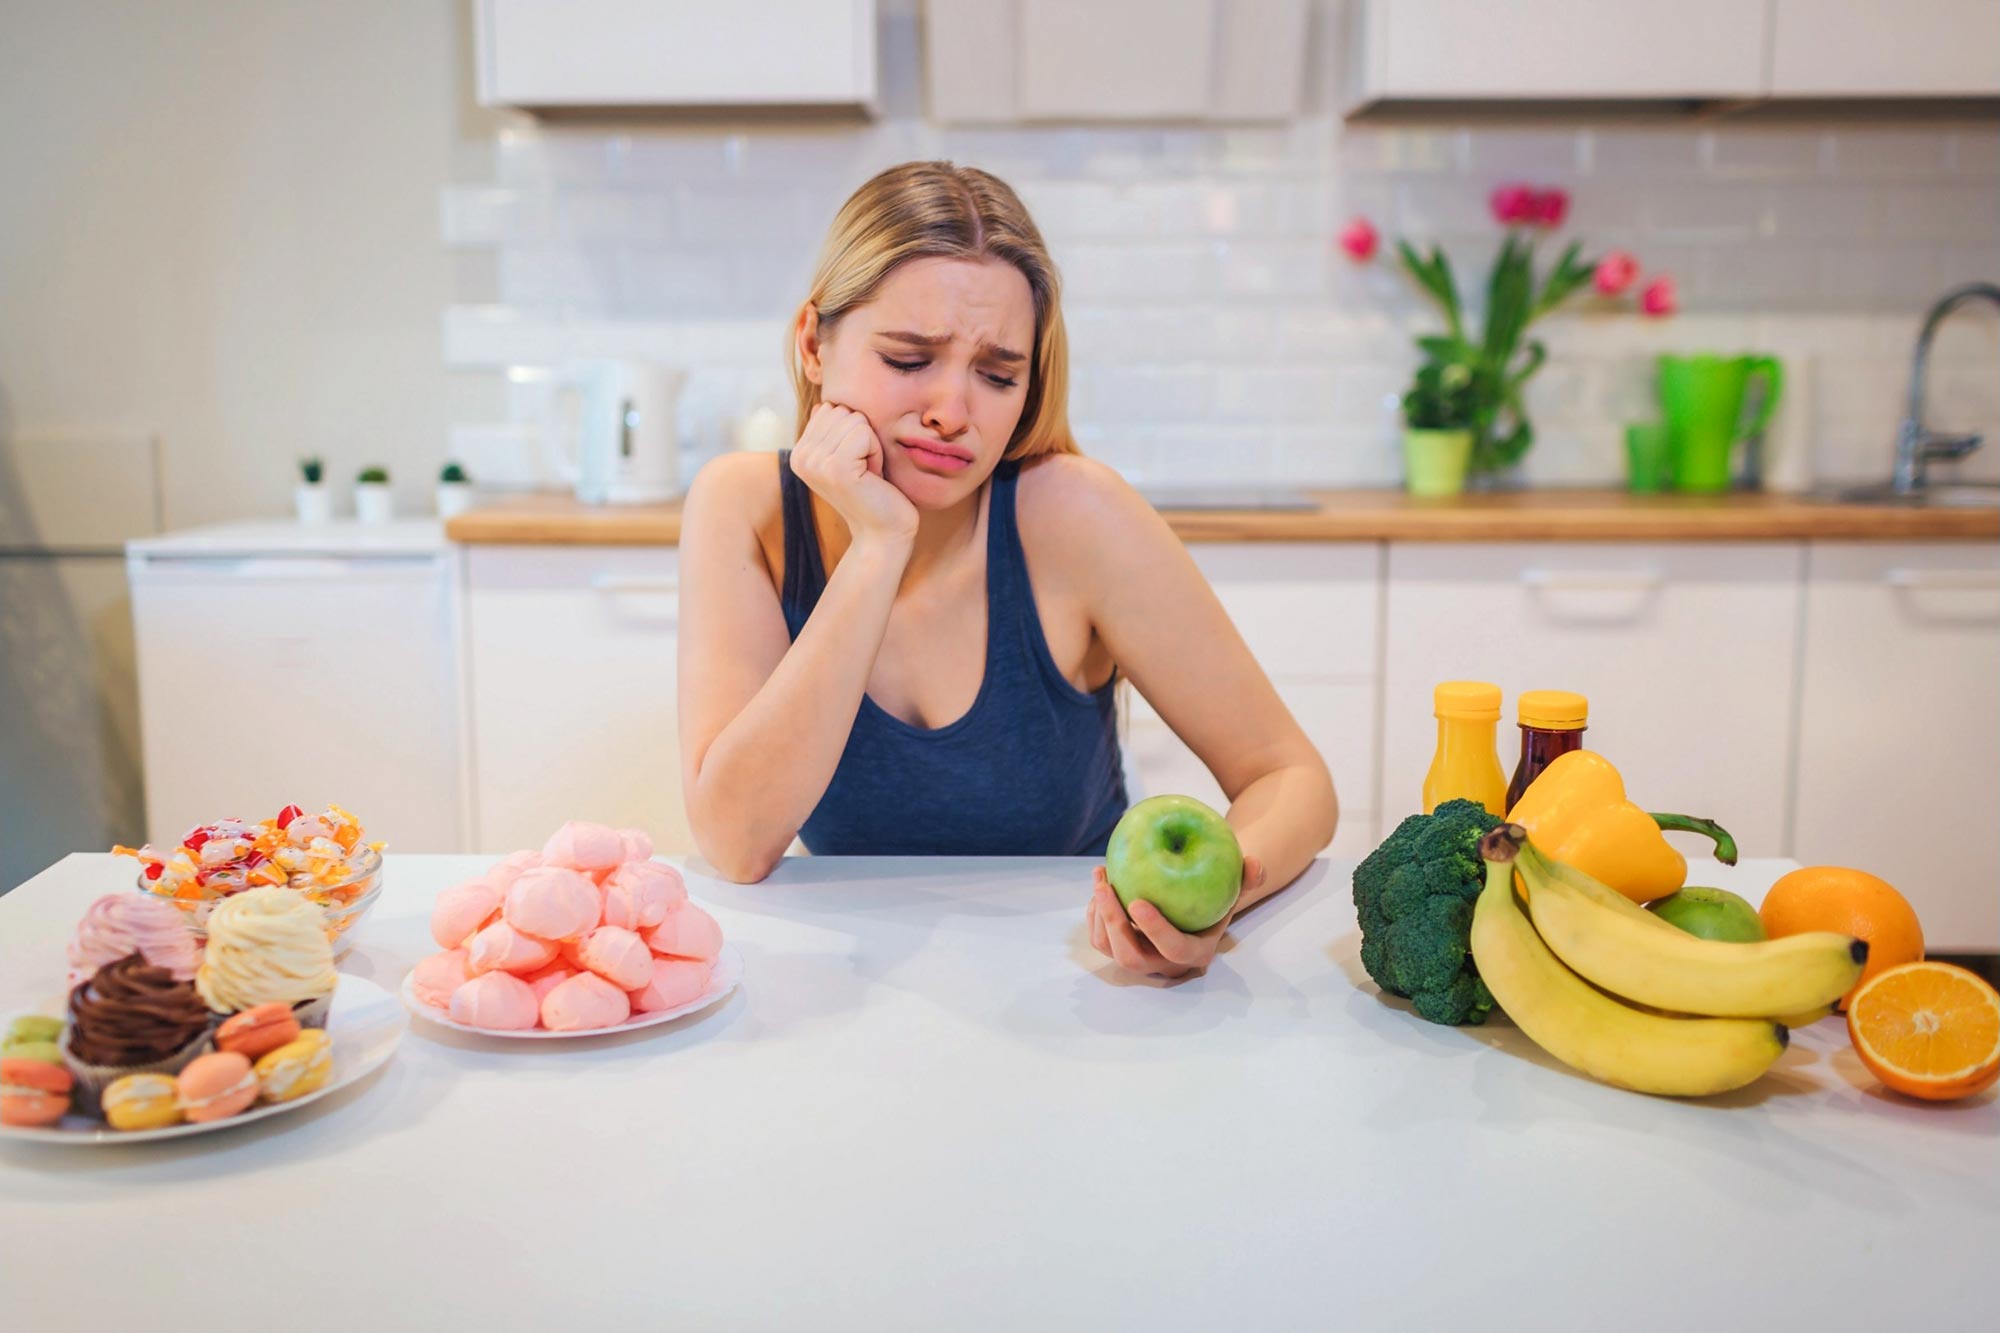 Woman Diet Struggle Healthy Unhealthy Food